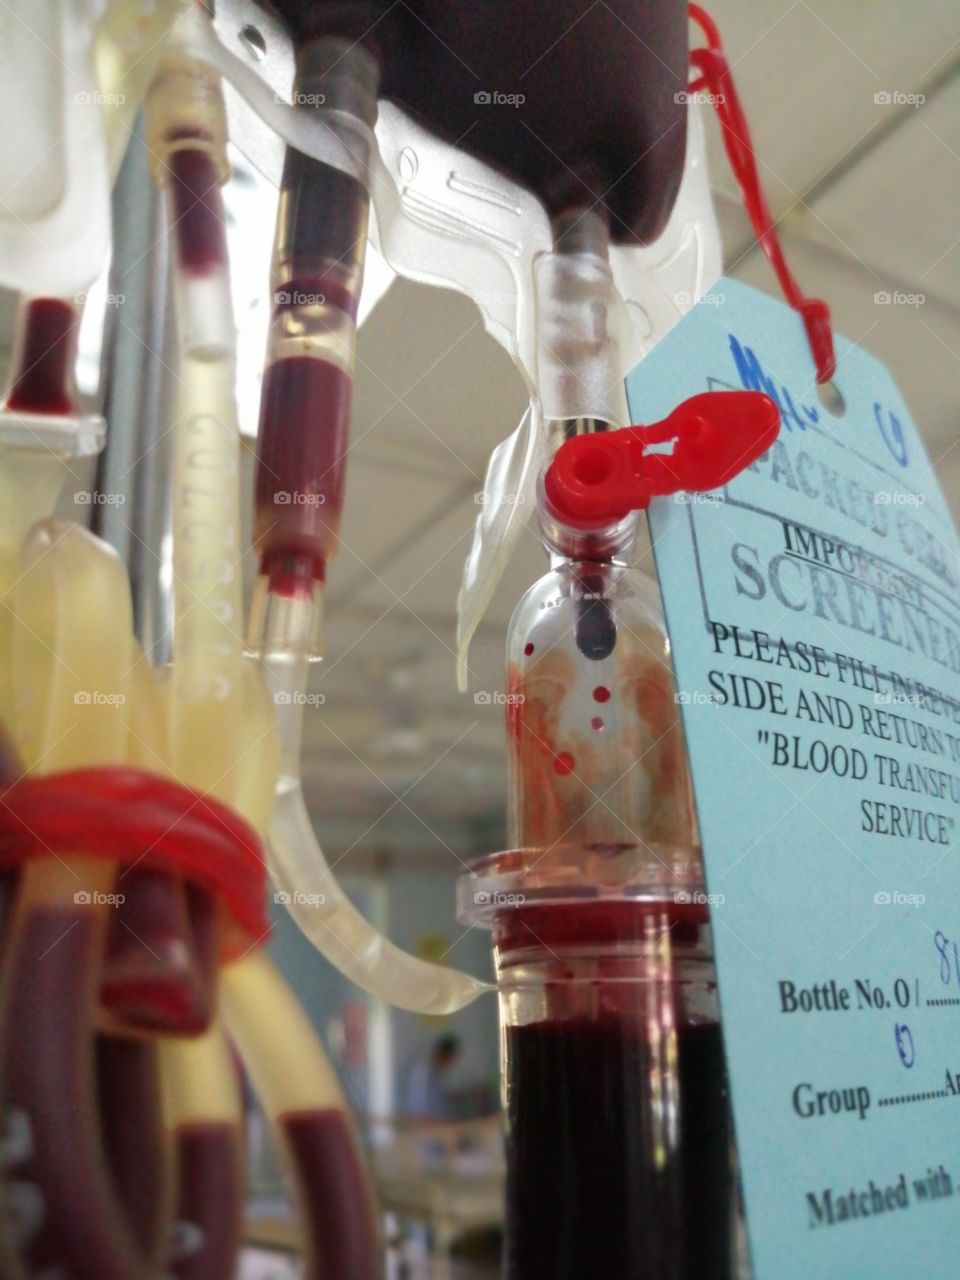 My transfusion blood